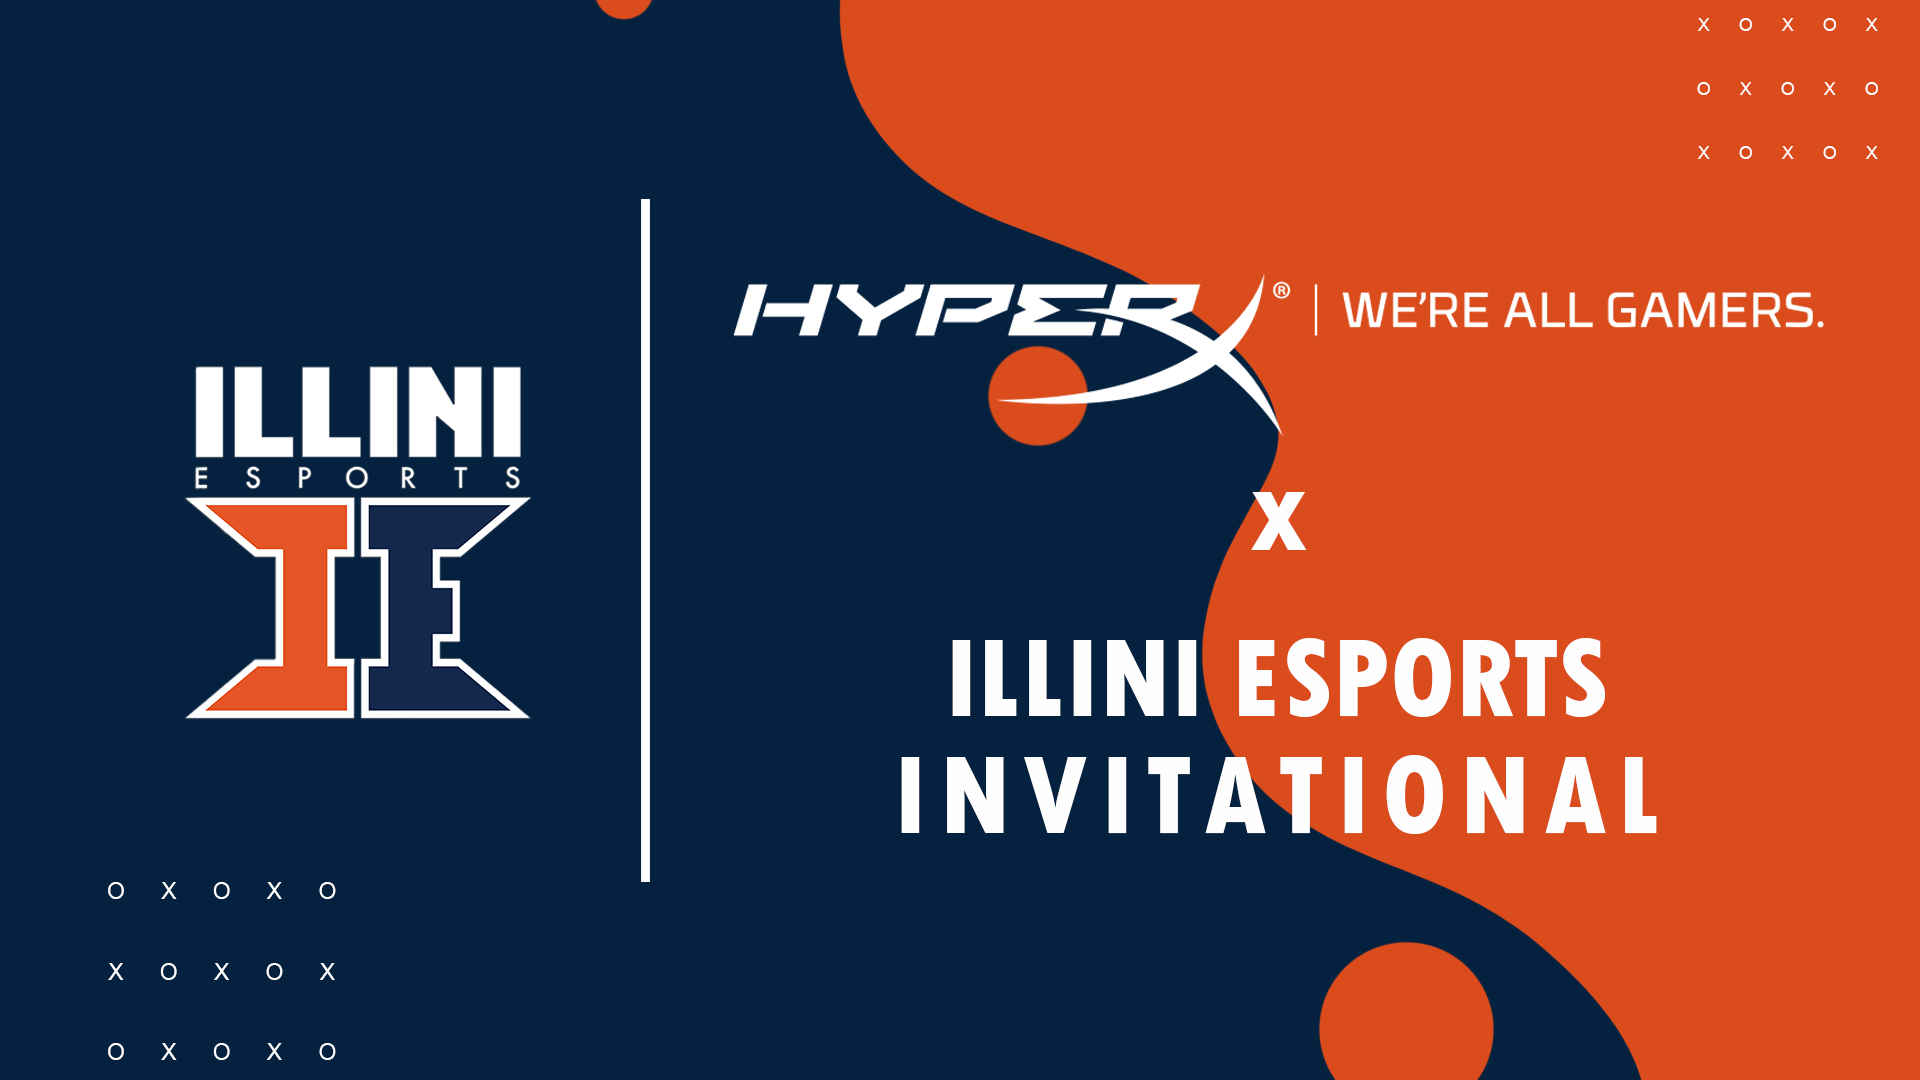 HyperX partnering with Illini Esports for the Illini Esports Invitational!